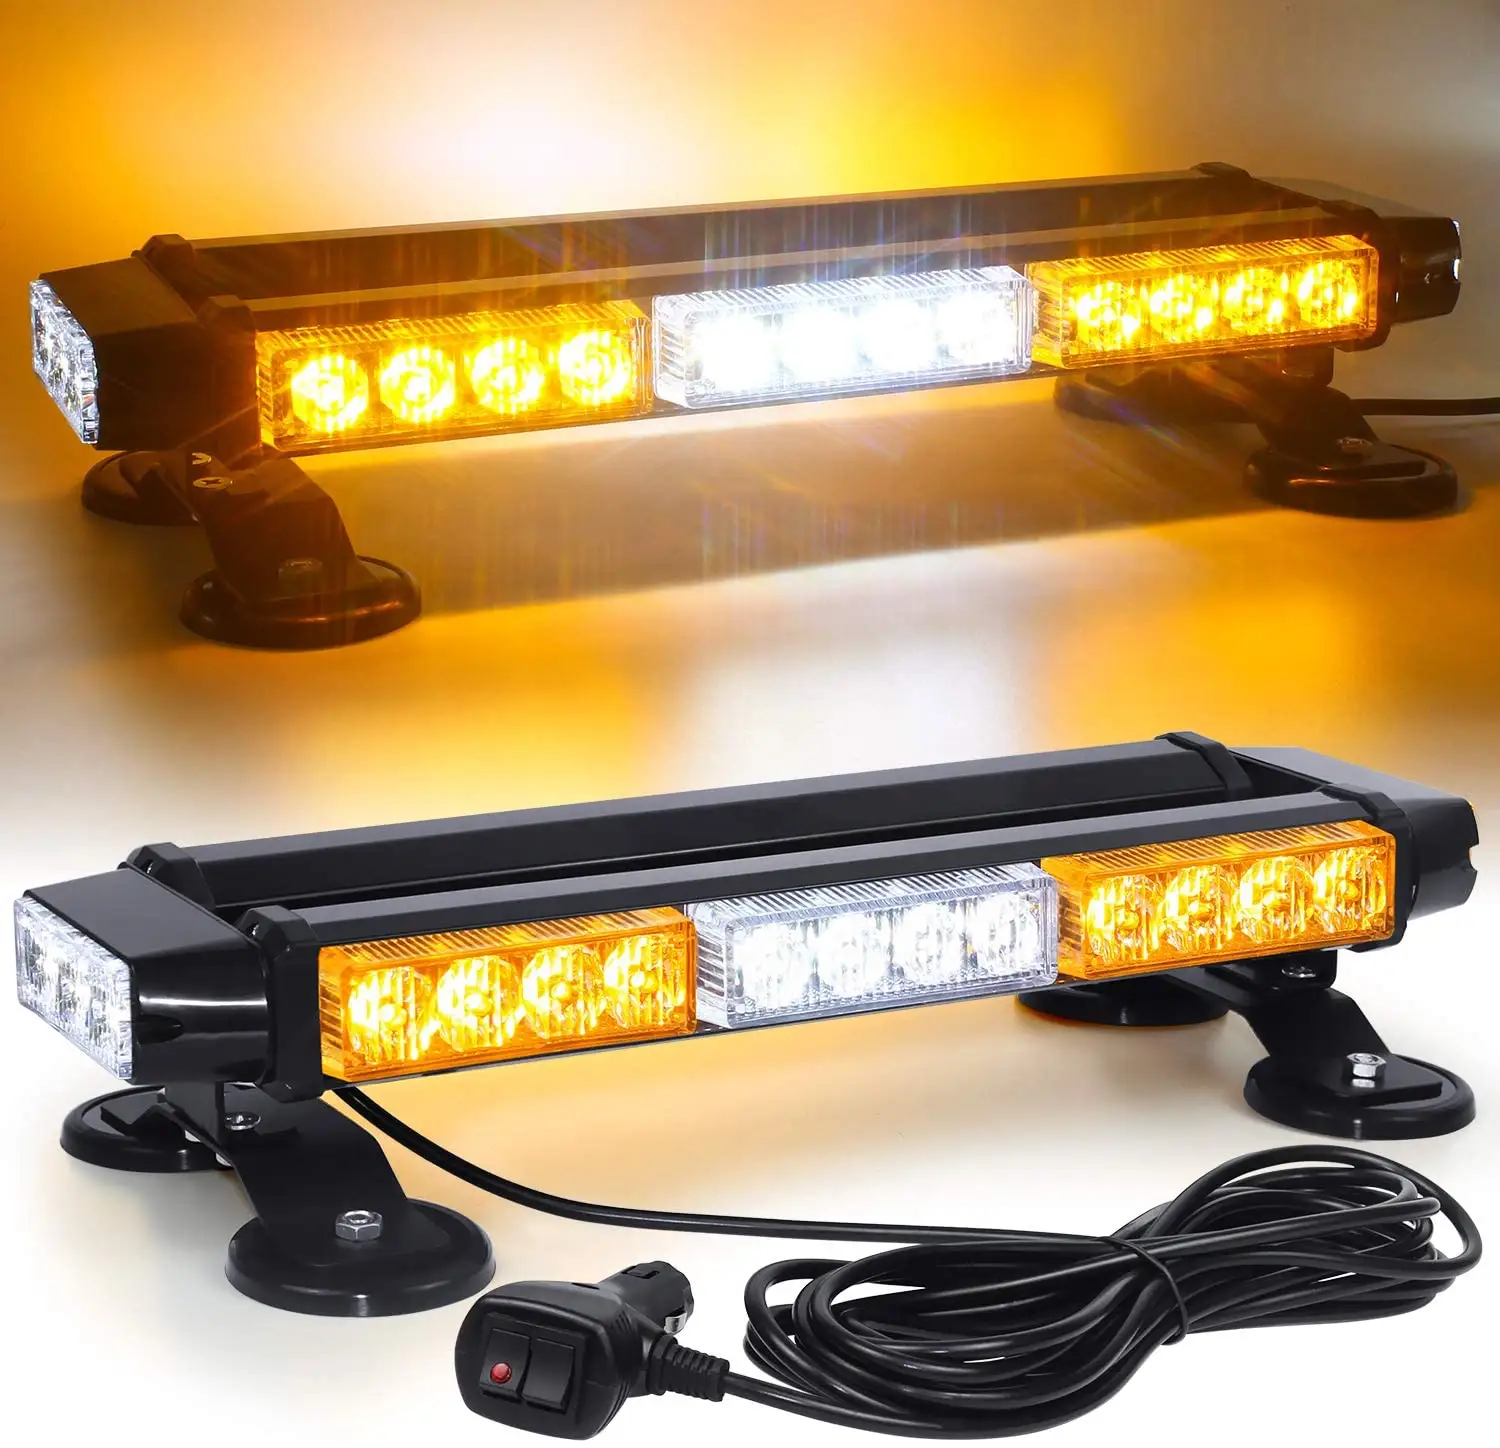 Amber White Dual Color 30LEDs Safety Strobe Flashing Light Bar High Intensity Traffic Emergency Hazard Warning Light with Magnet